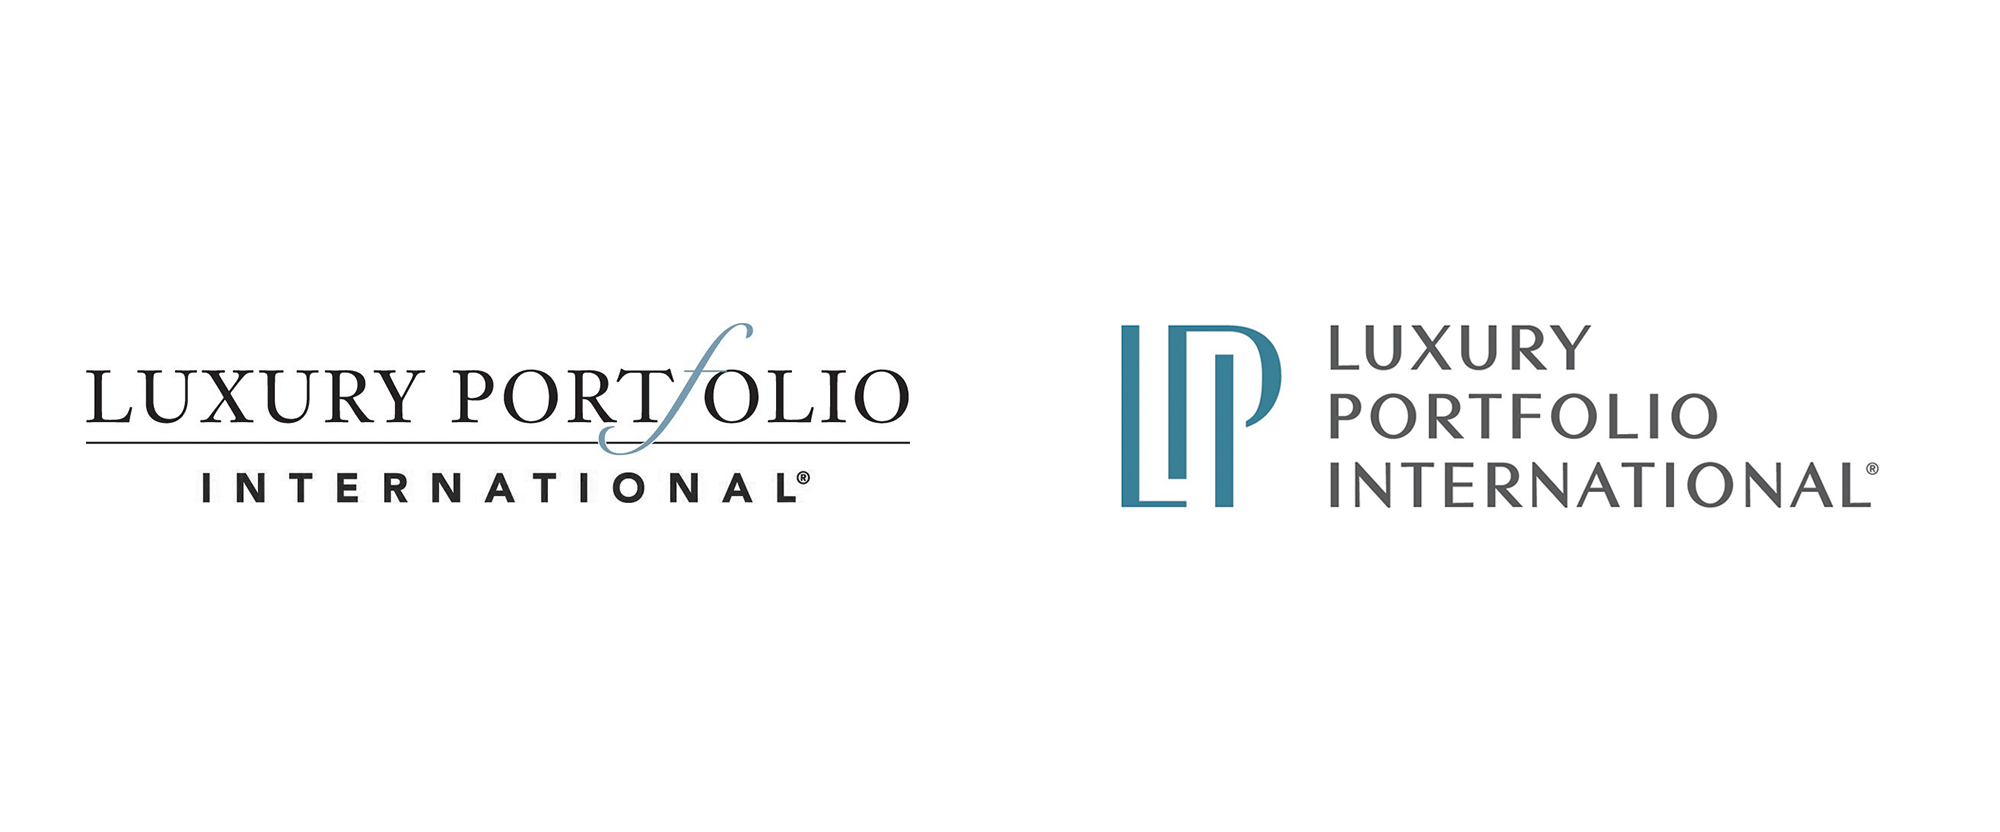 Portfolio Logo - Brand New: New Logo for Luxury Portfolio International by 1000watt